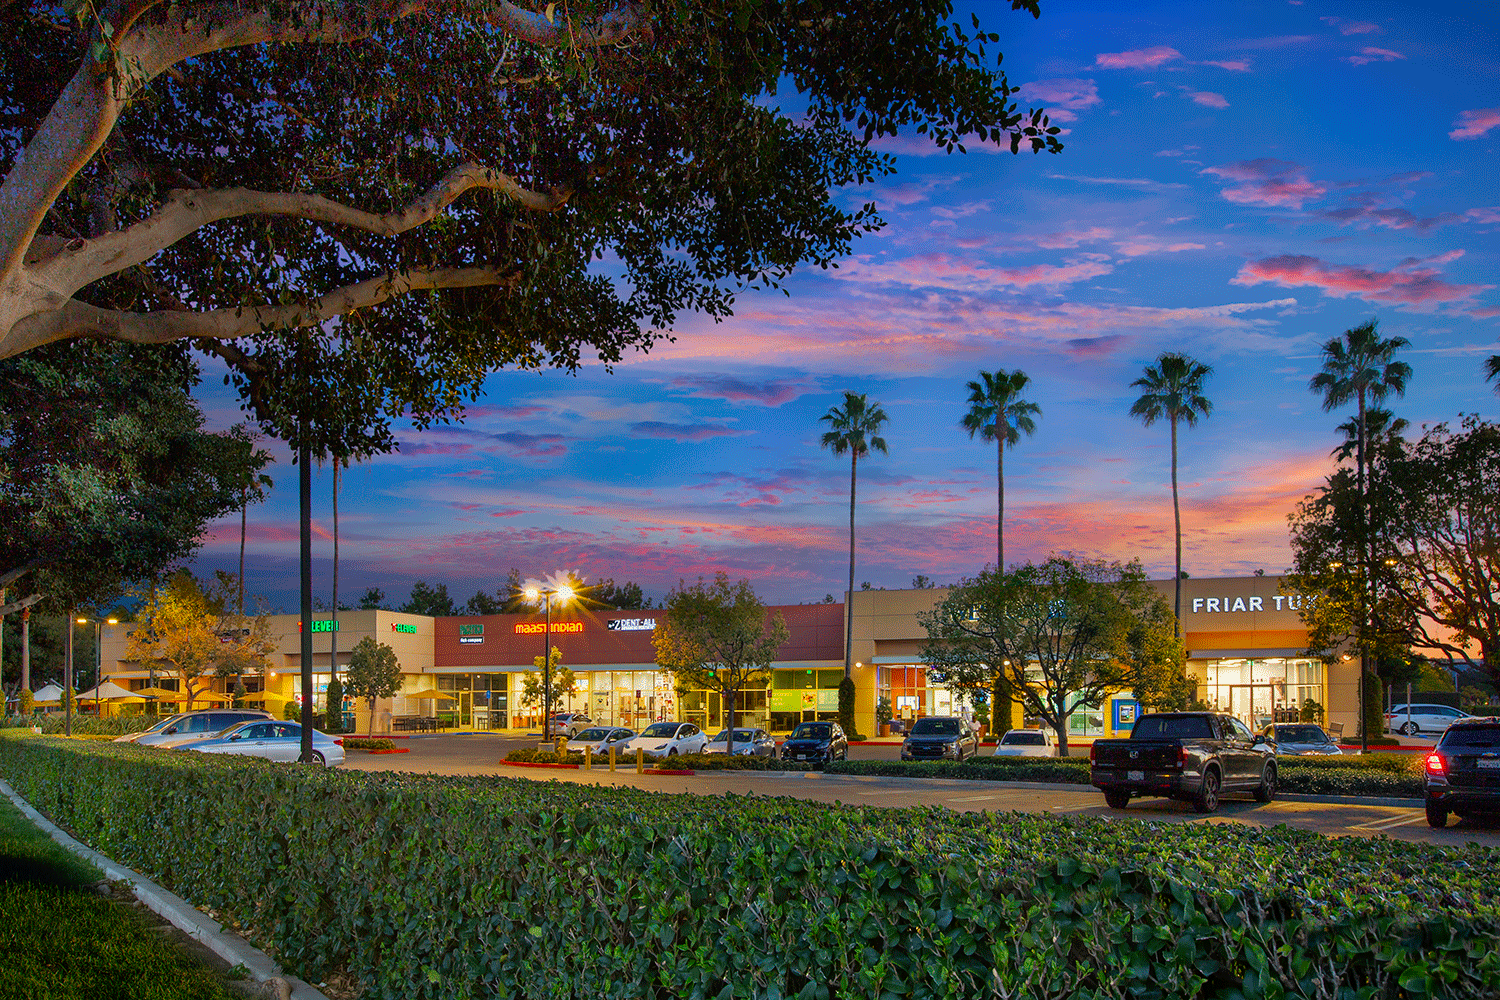  Exterior view of Alton Retail Center at dusk